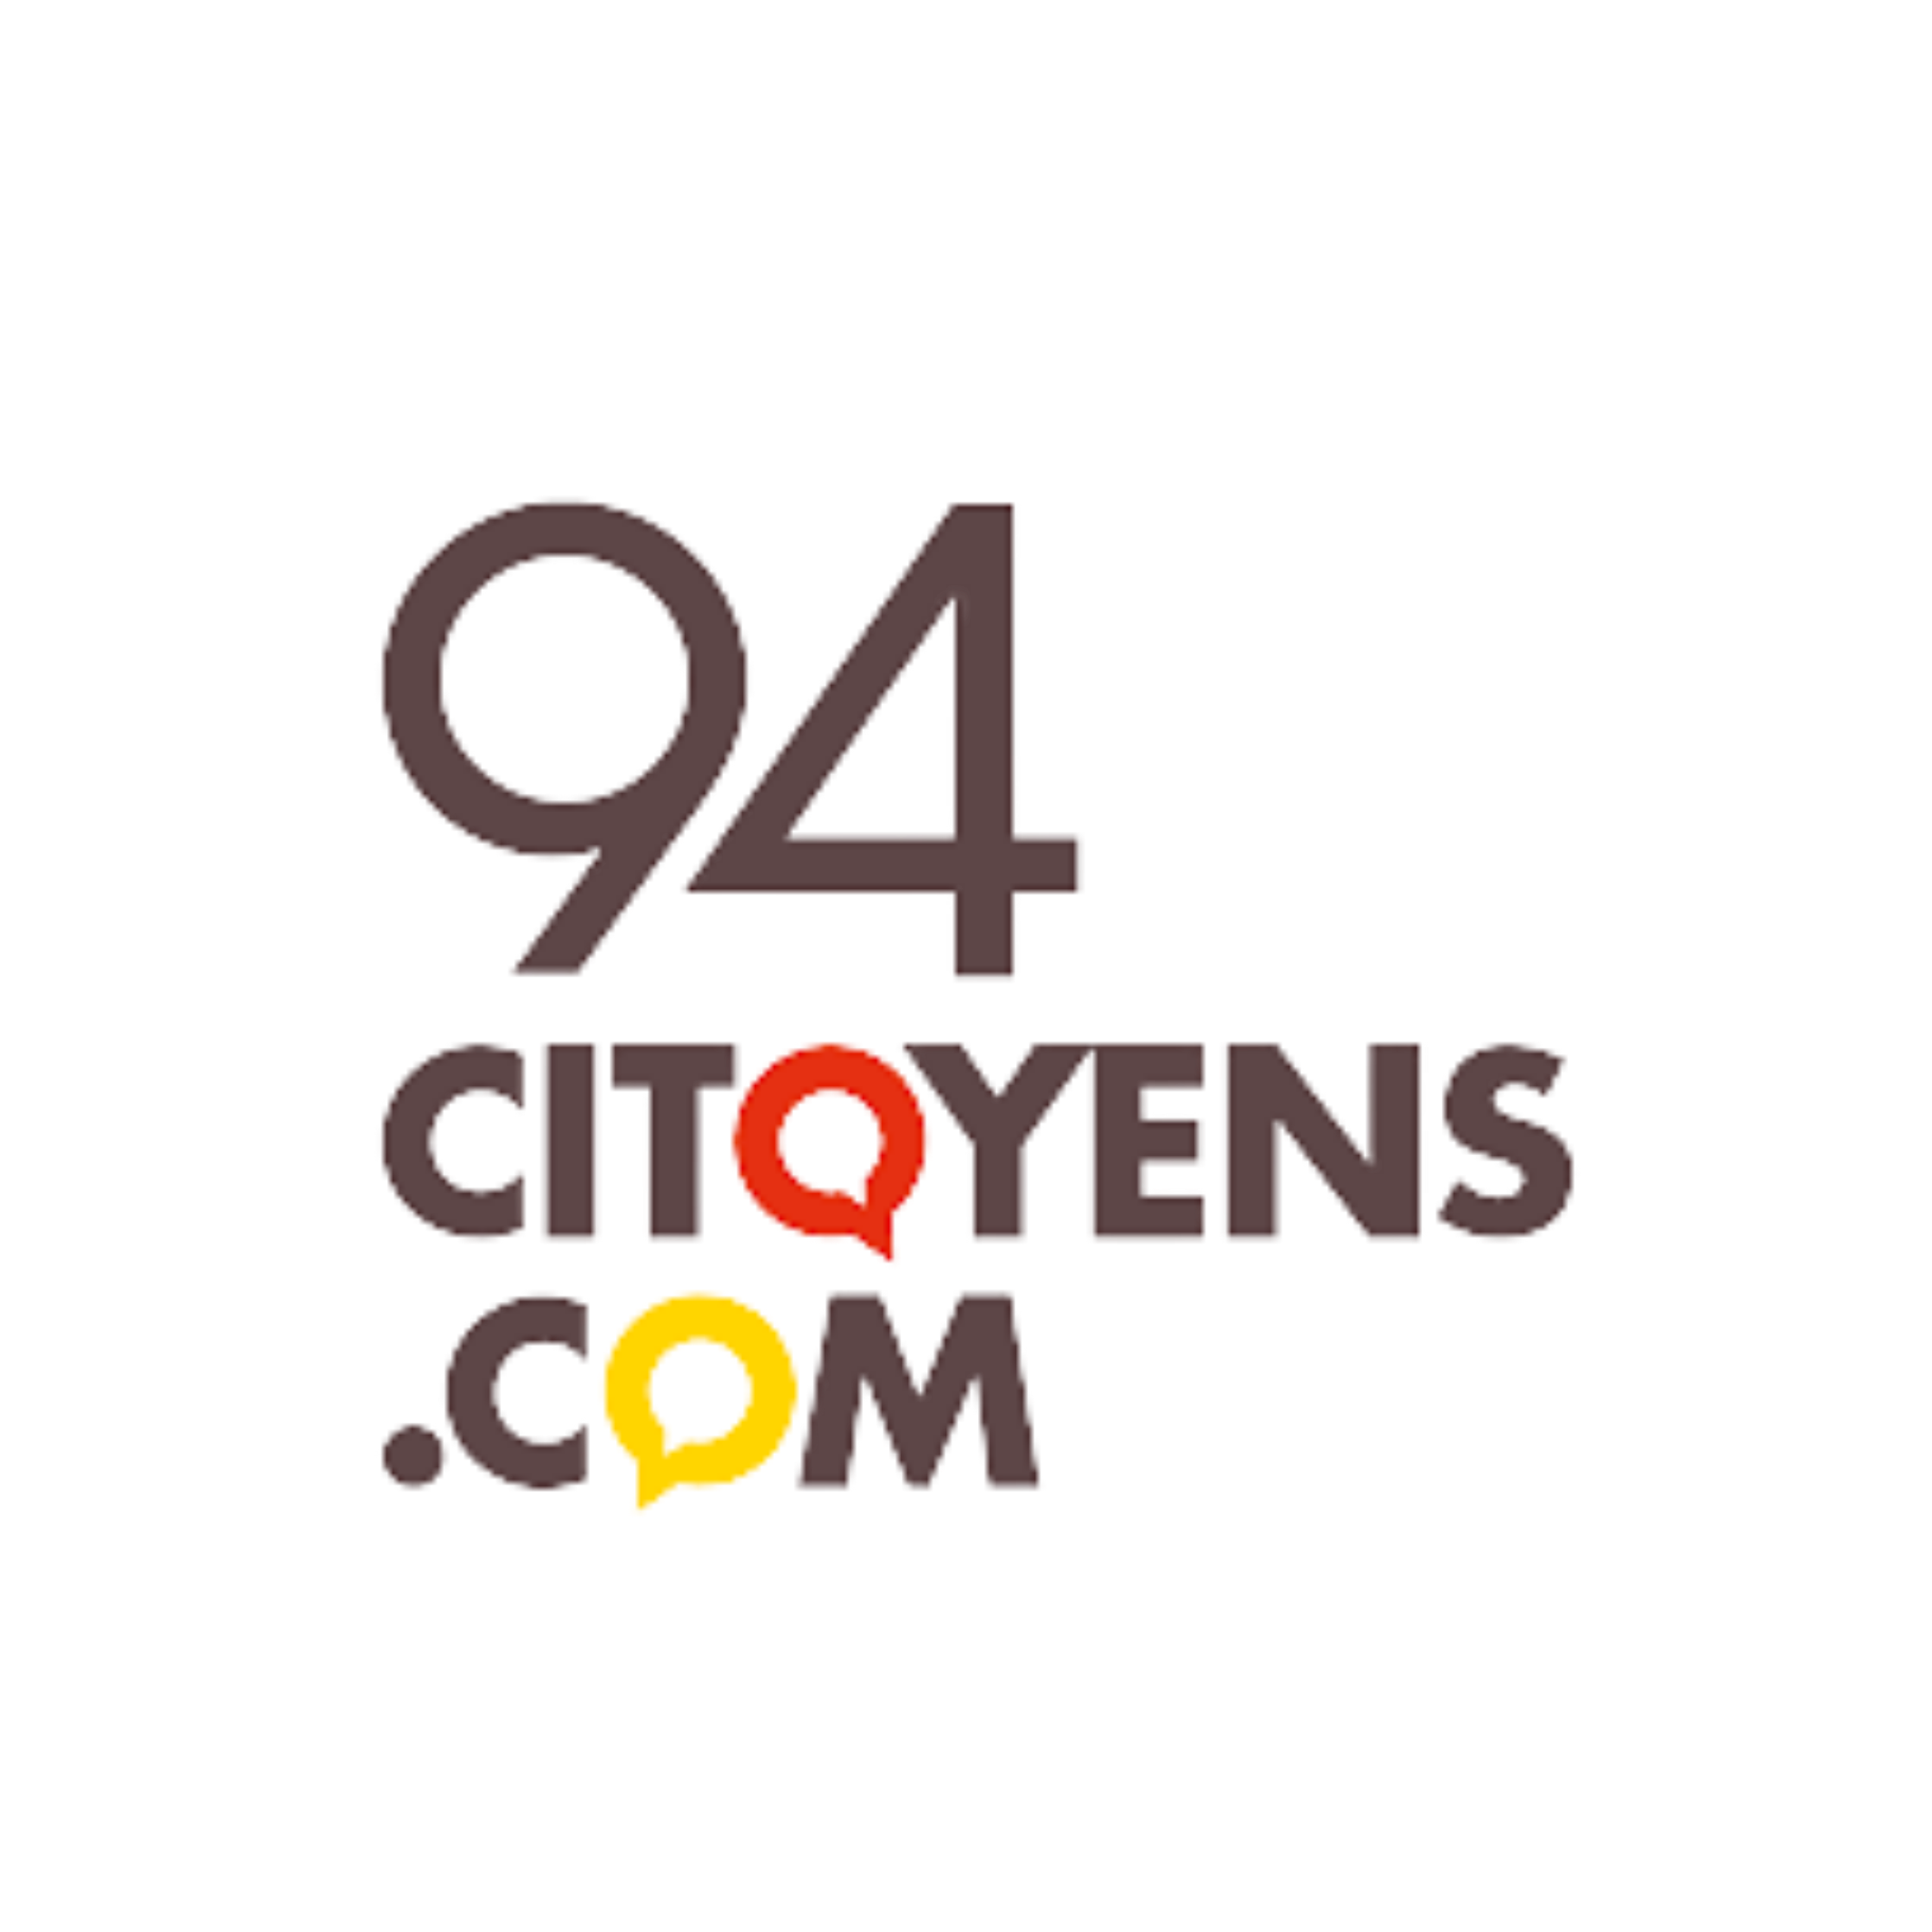 94 citoyens logo png